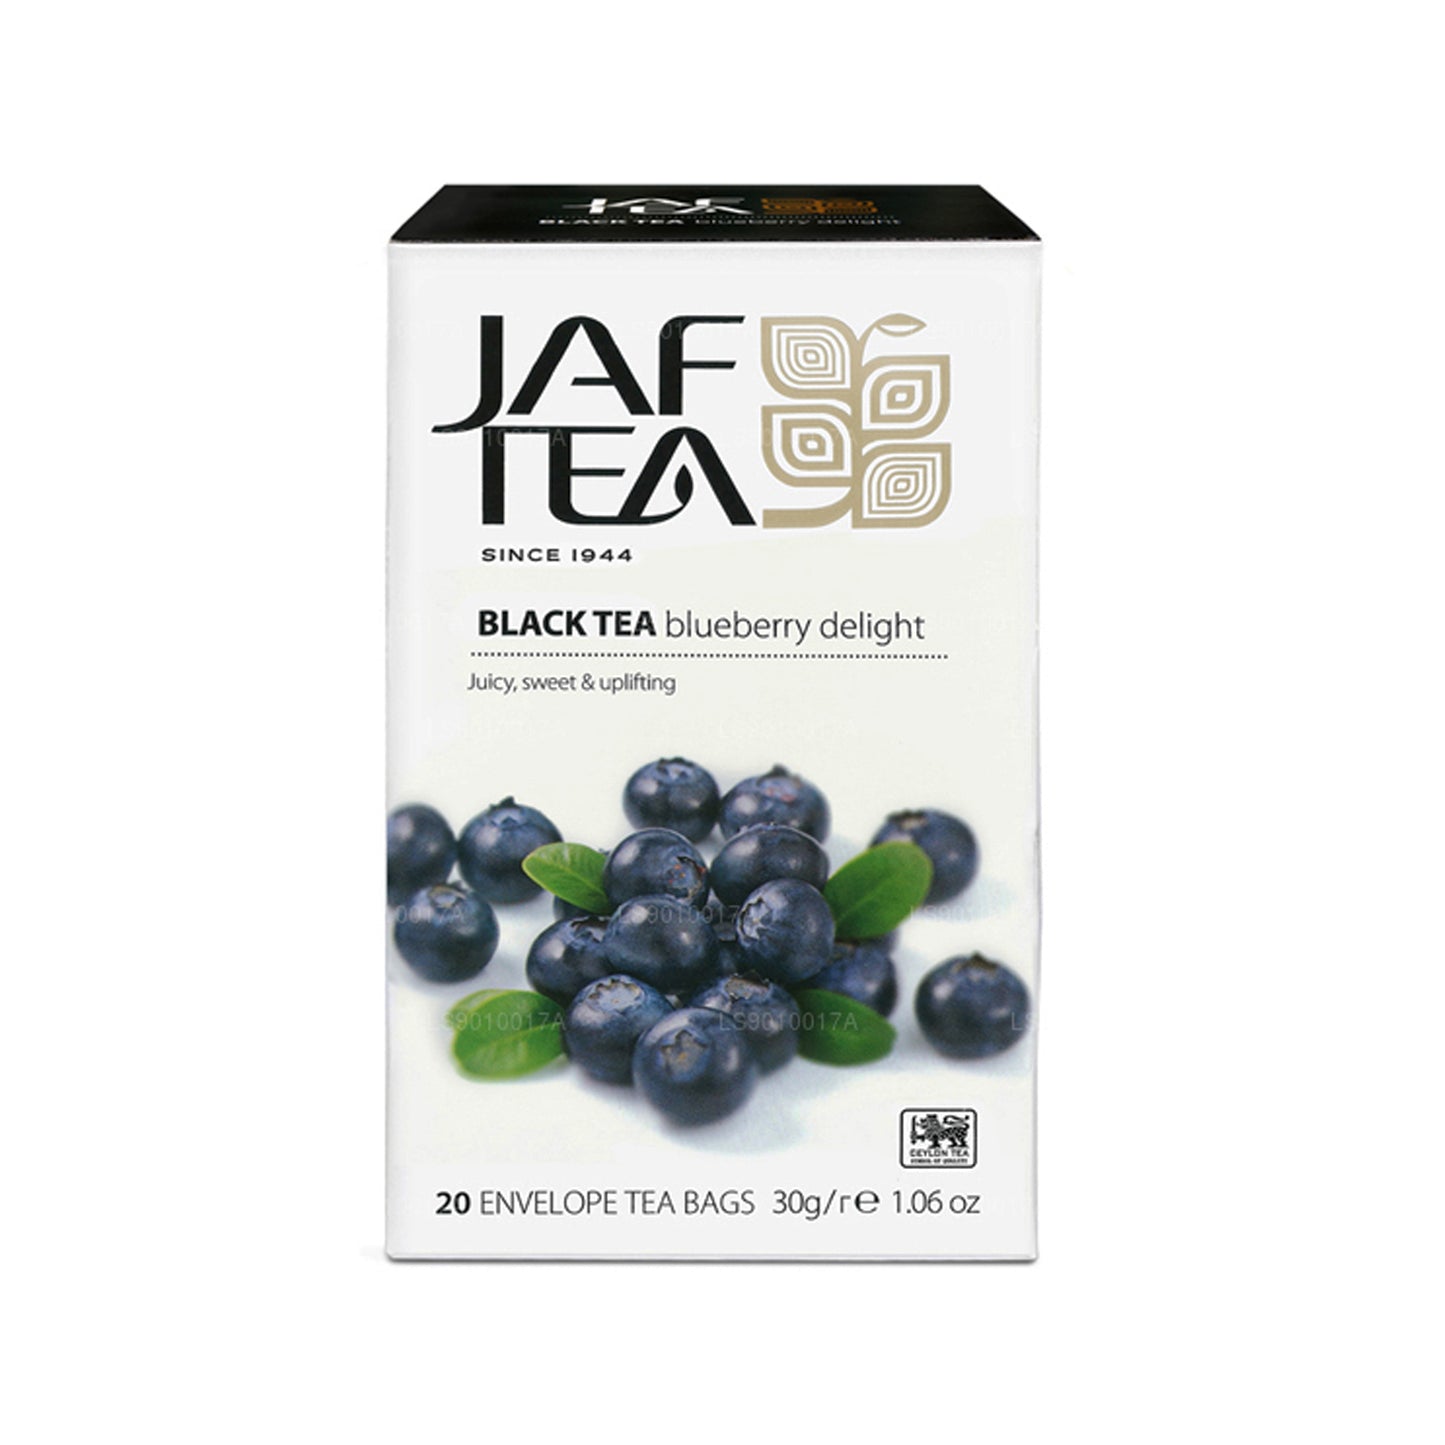 Jaf Tea Blueberry Delight Black Tea (30g) 20 Envelope Tea Bags